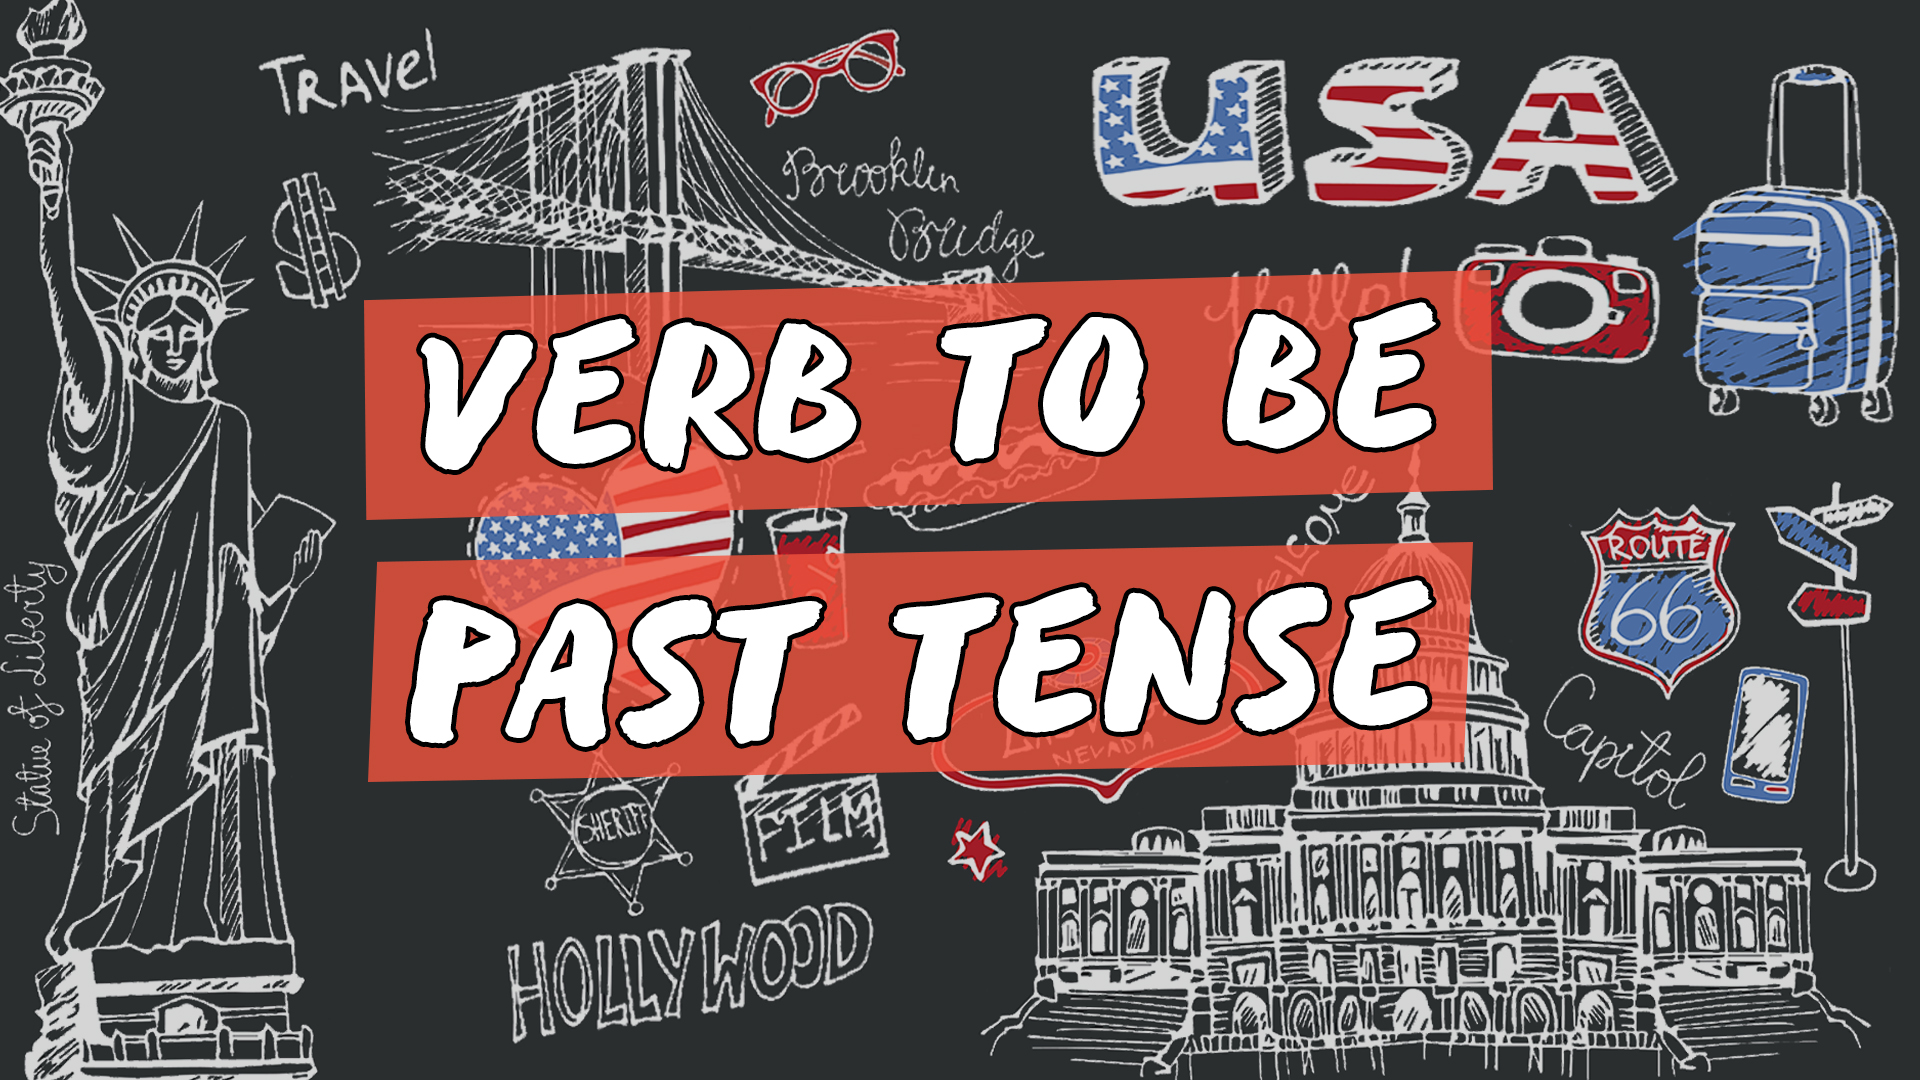 "Verb To Be: Past Tense" escrito sobre ilustração de diversos ícones estadunidenses